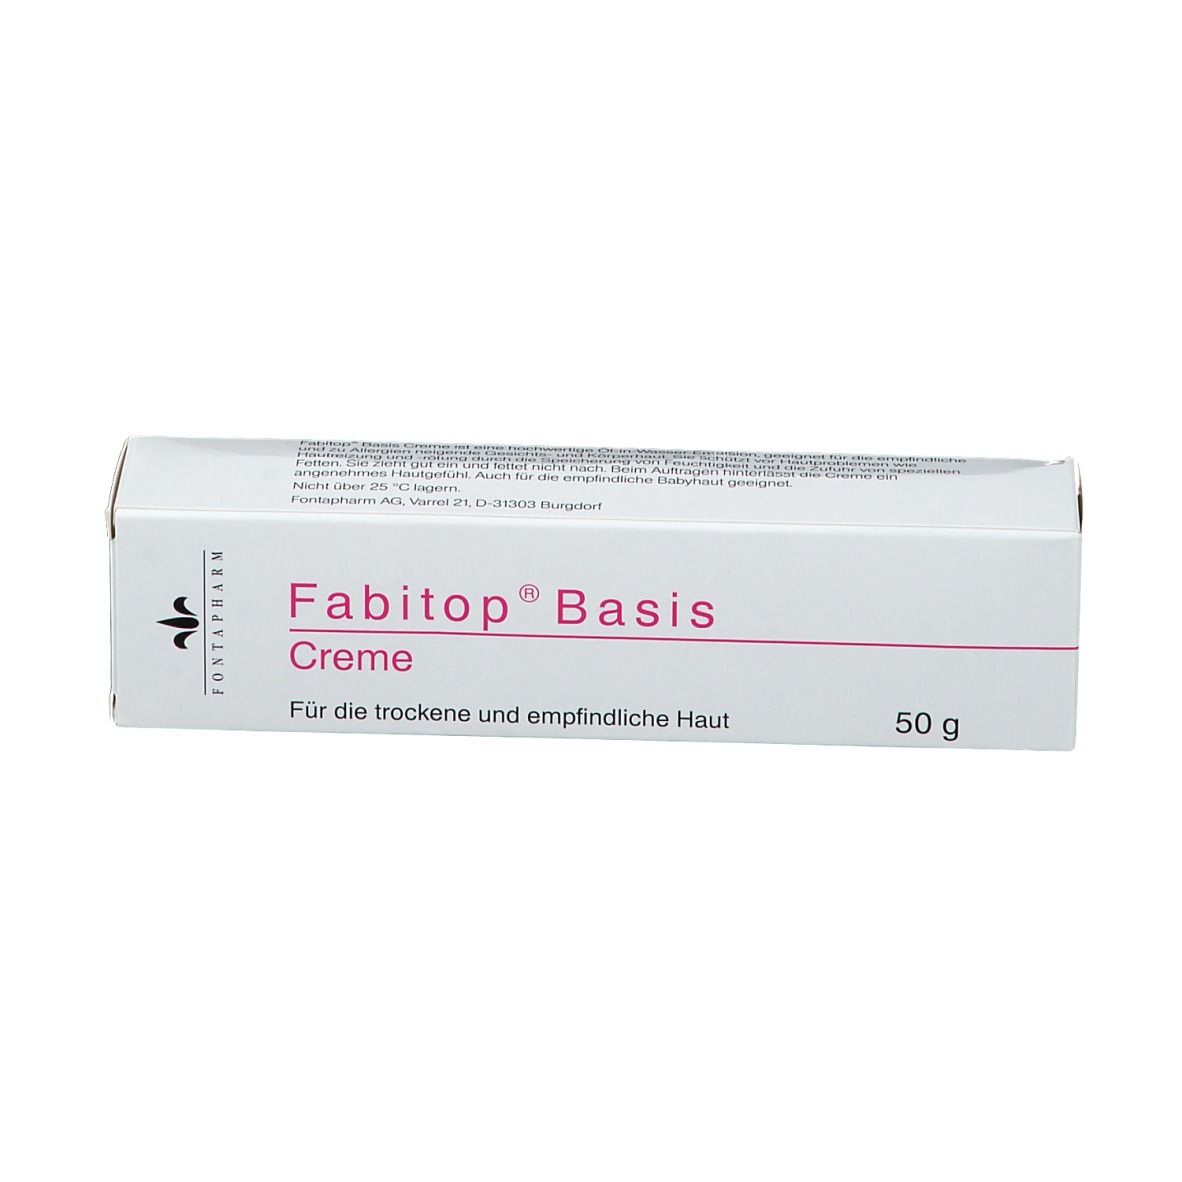 Fabitop® Creme de base